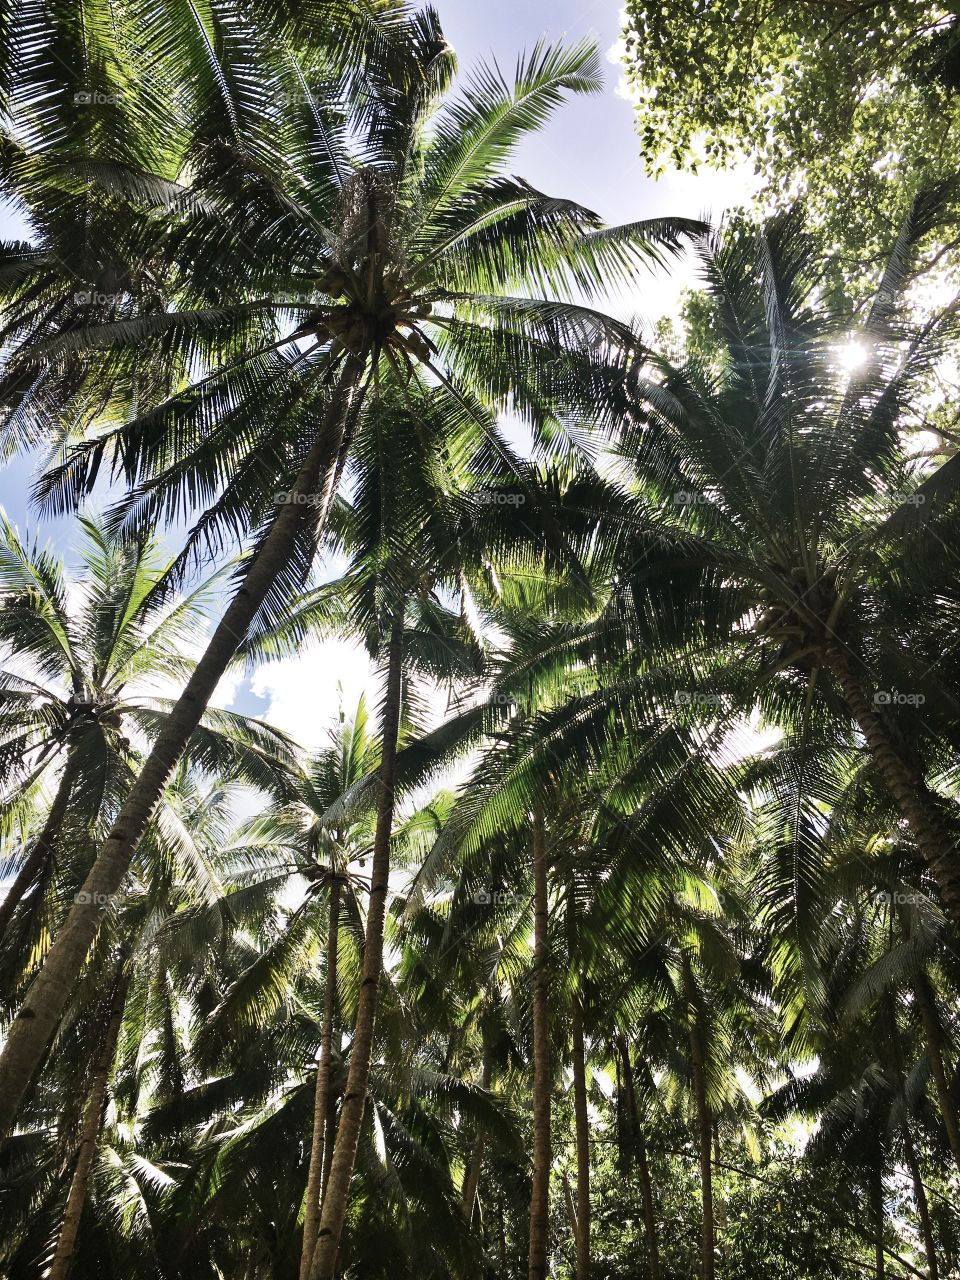 Palm trees
